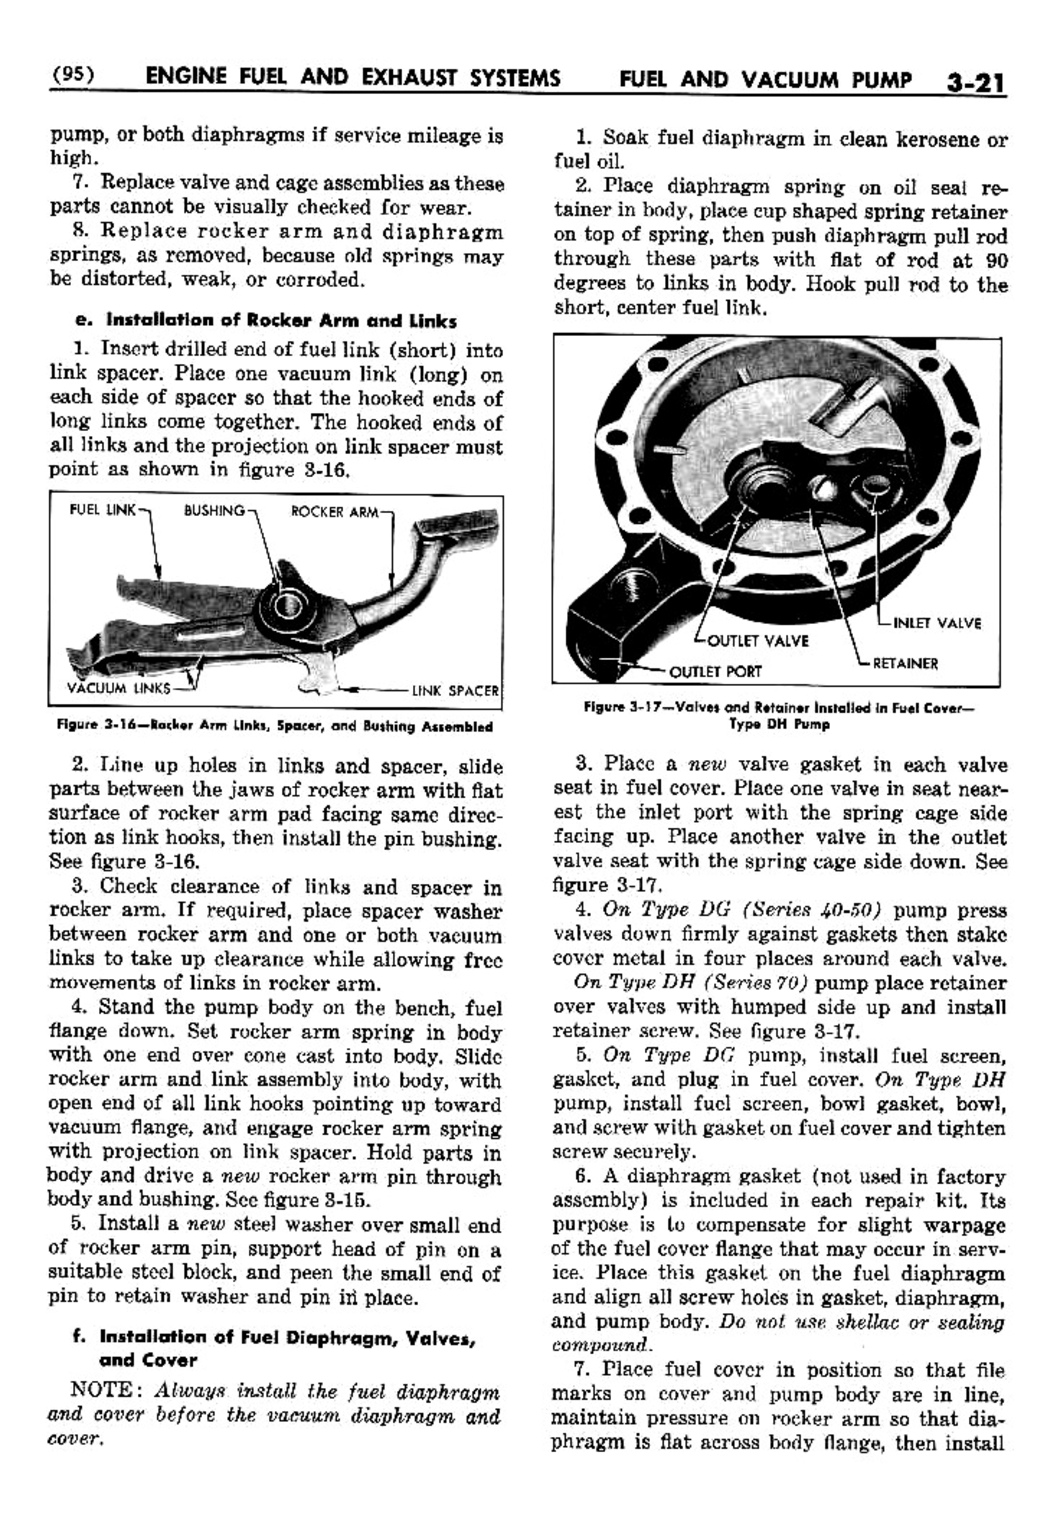 n_04 1952 Buick Shop Manual - Engine Fuel & Exhaust-021-021.jpg